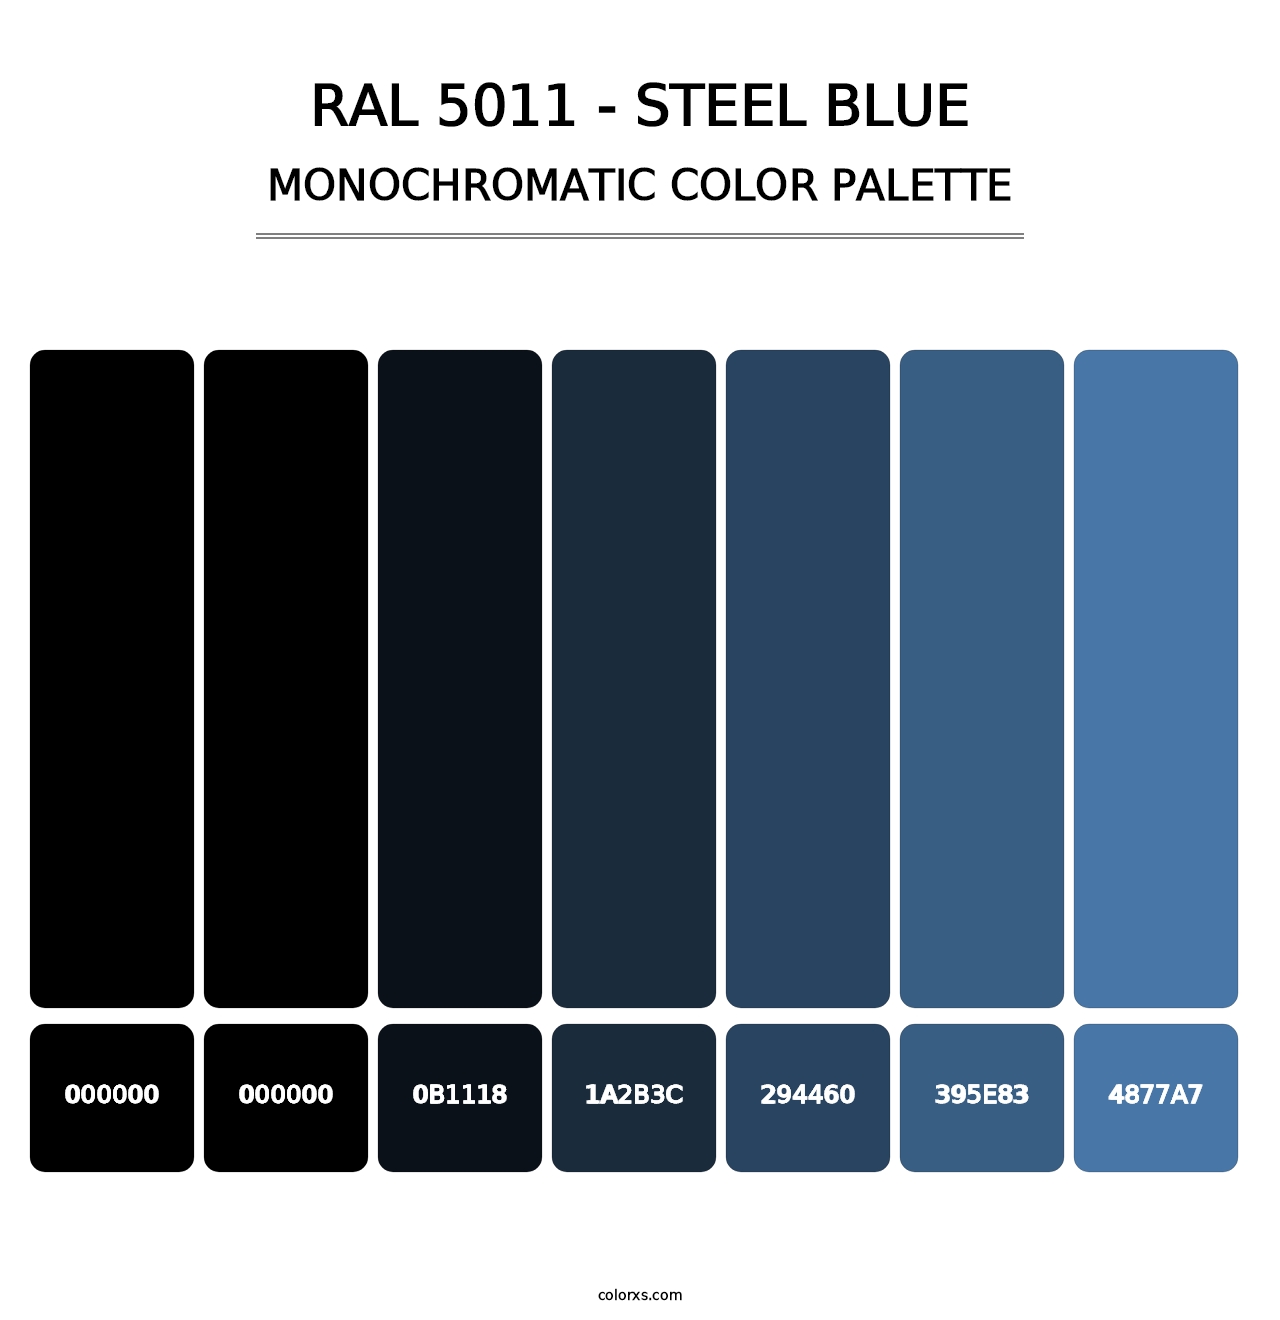 RAL 5011 - Steel Blue - Monochromatic Color Palette